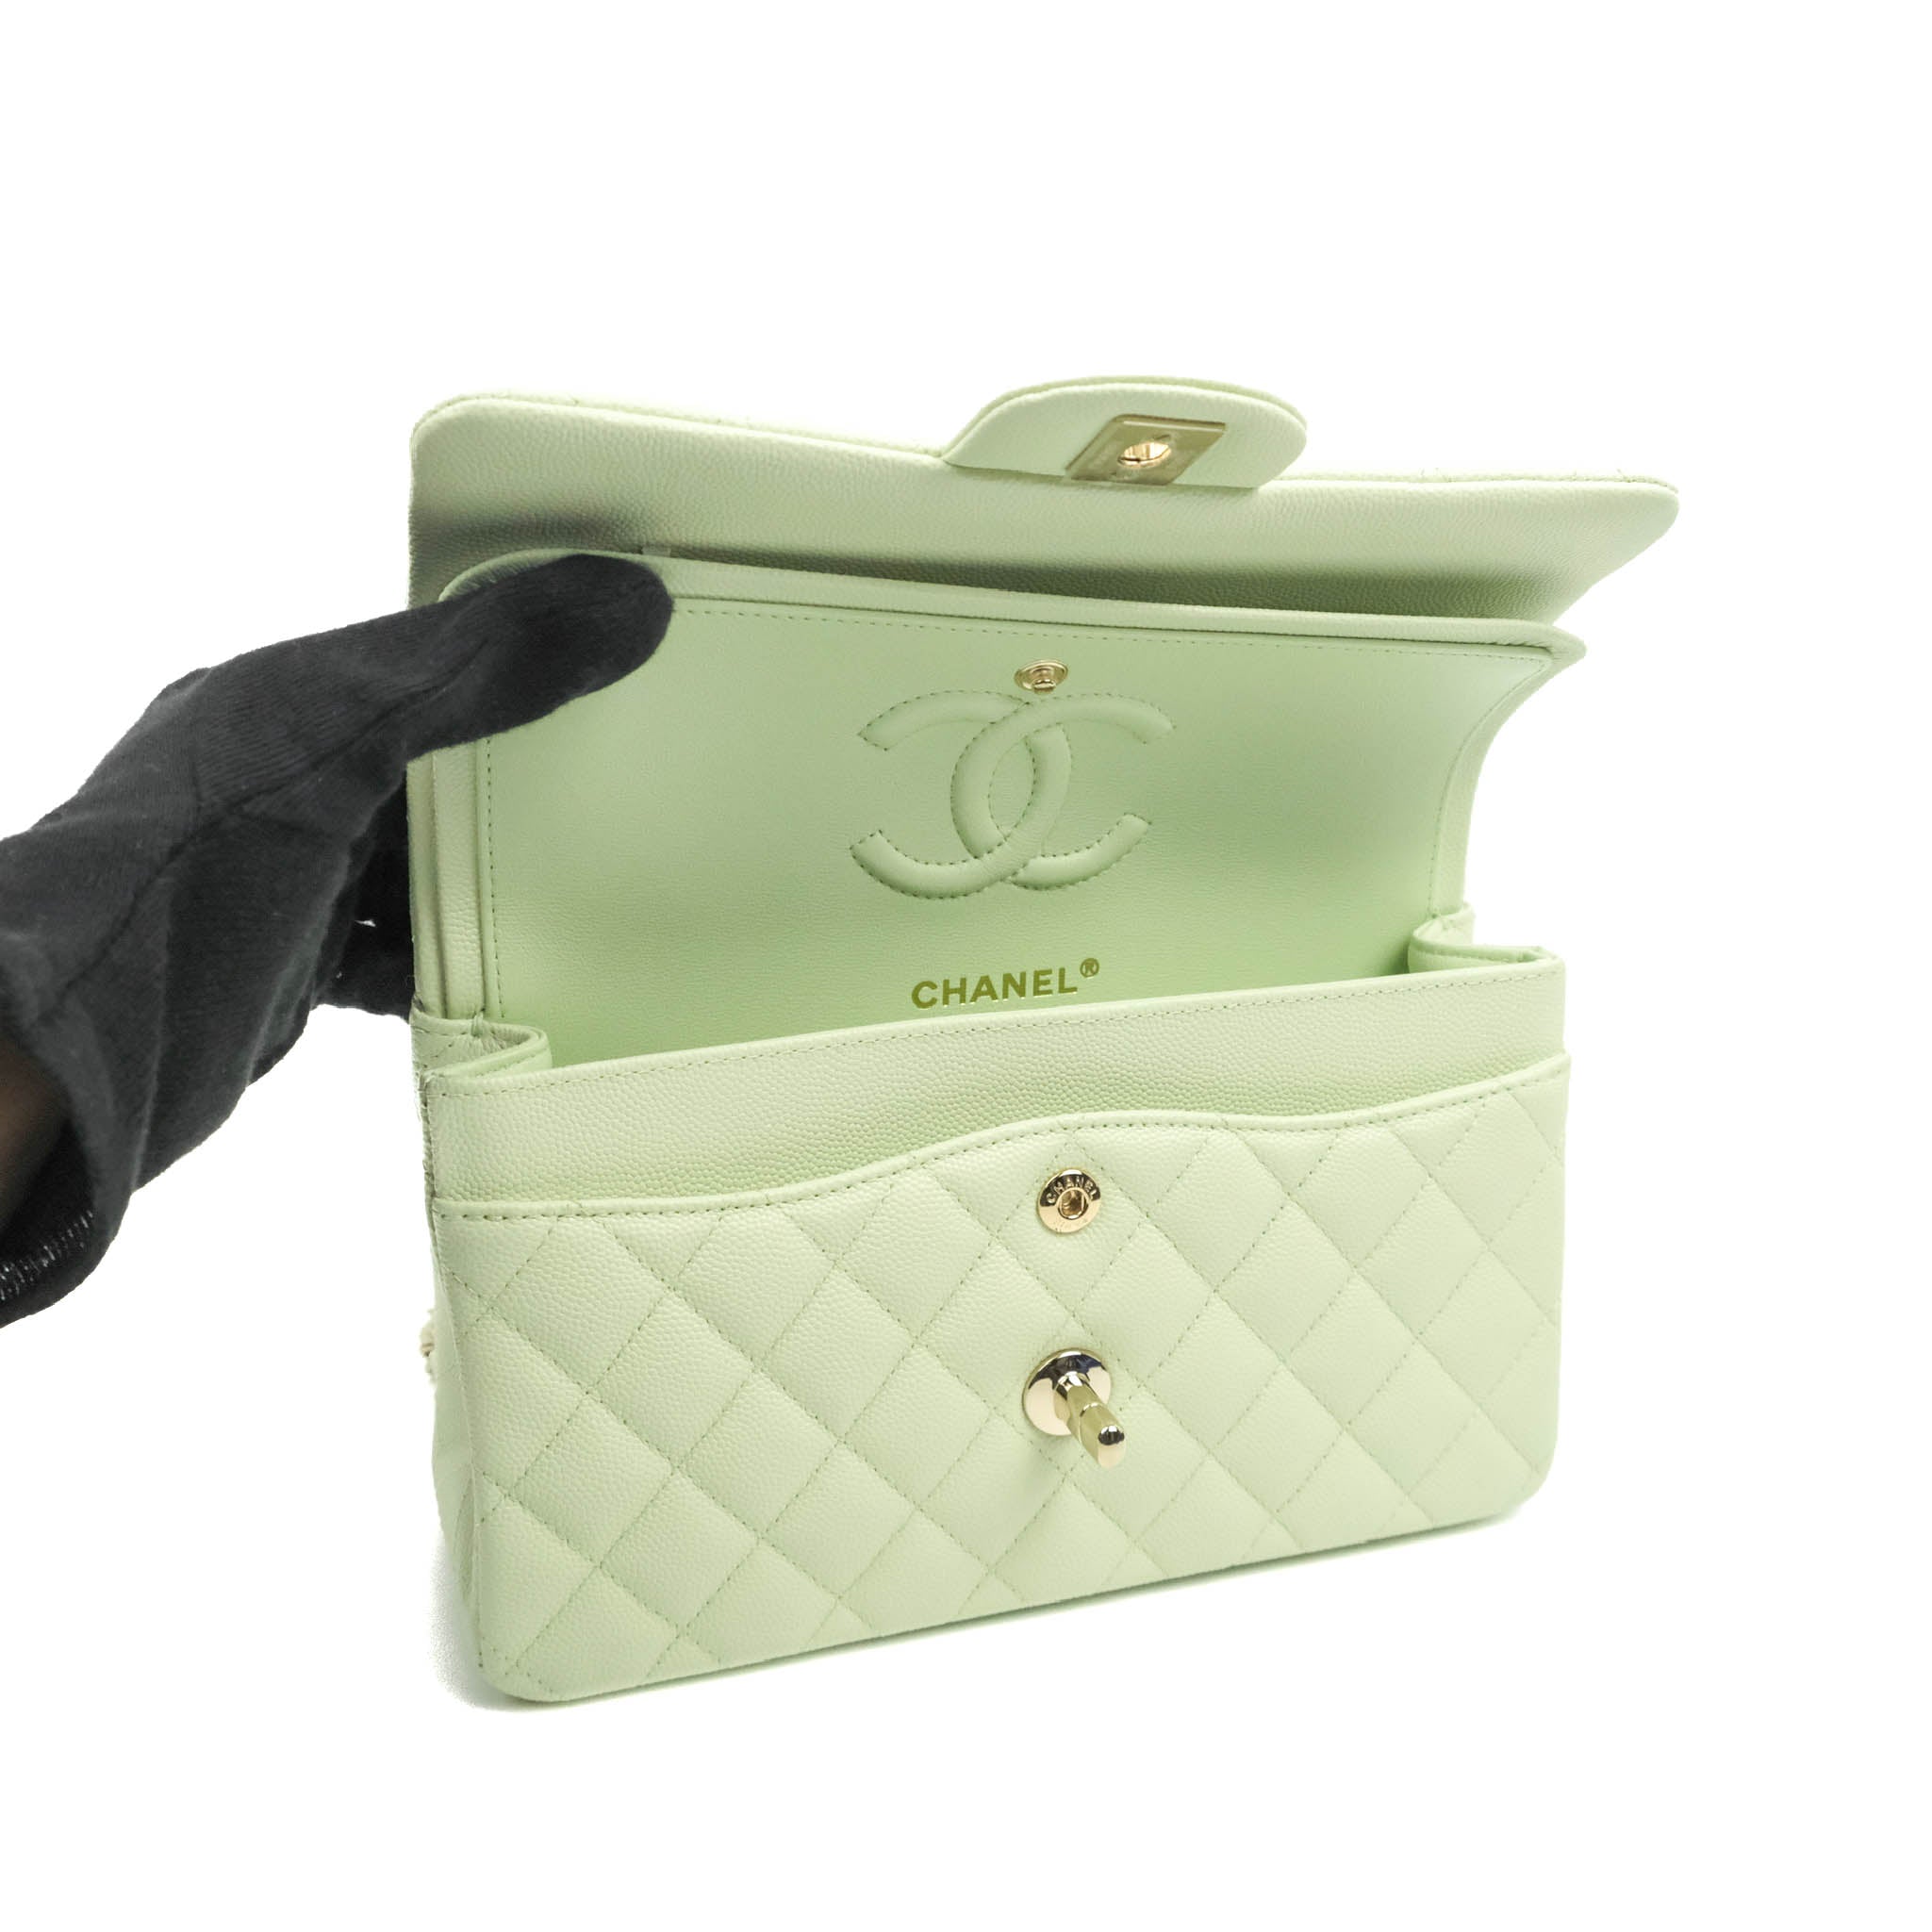 chanel mint green bag